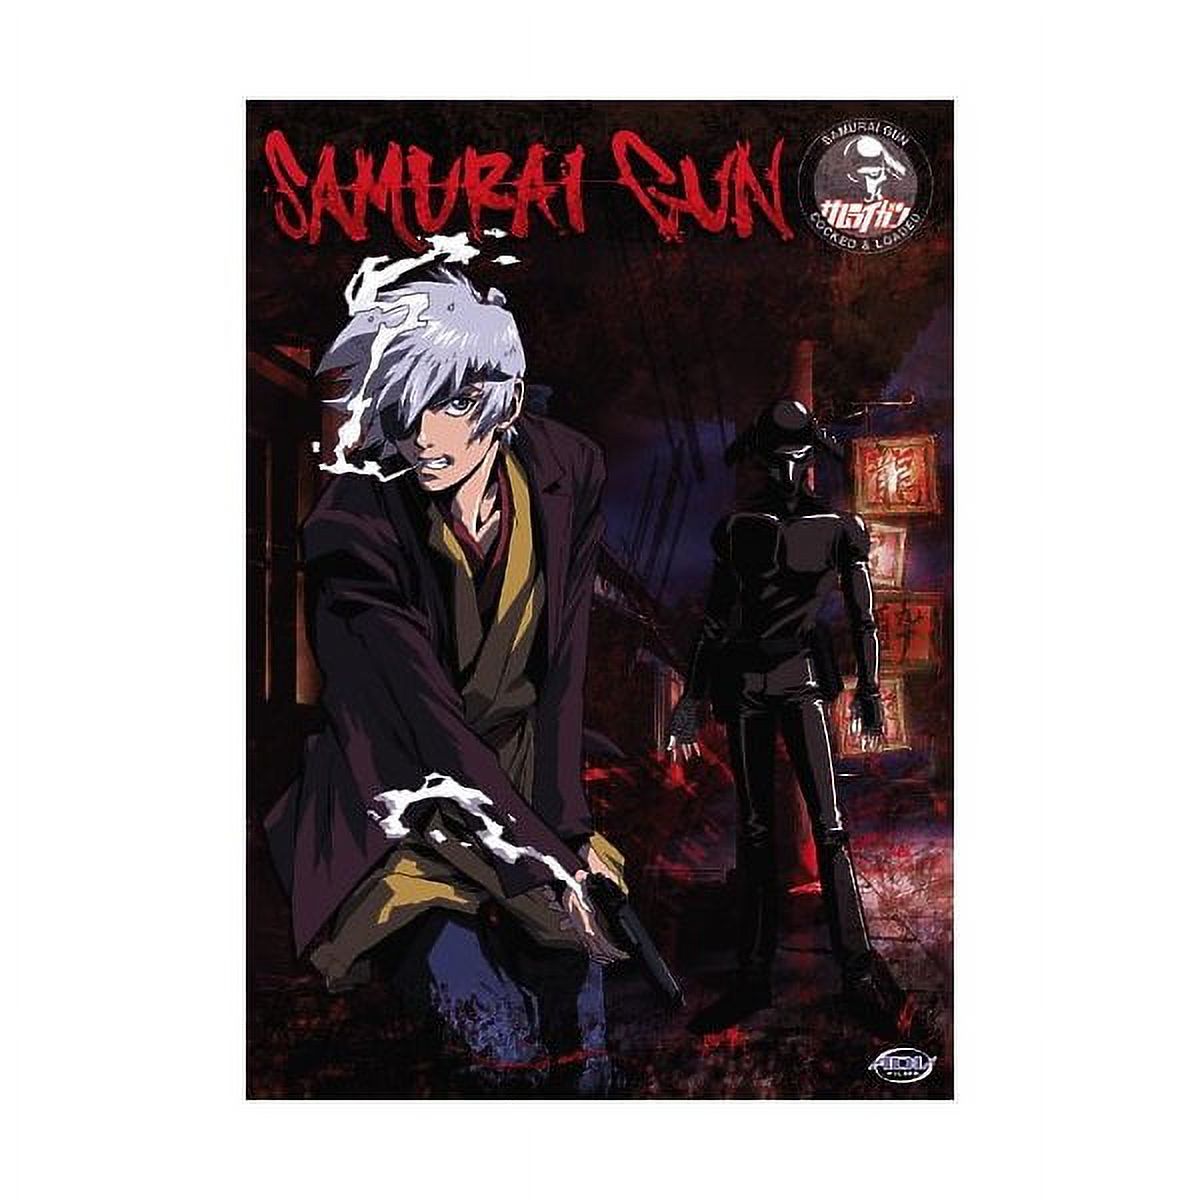 SAMURAI GUN-V01-COCKED & LOADED (DVD/EPISODES 1-4/ENG-BOTH)- (DVD) - image 1 of 1